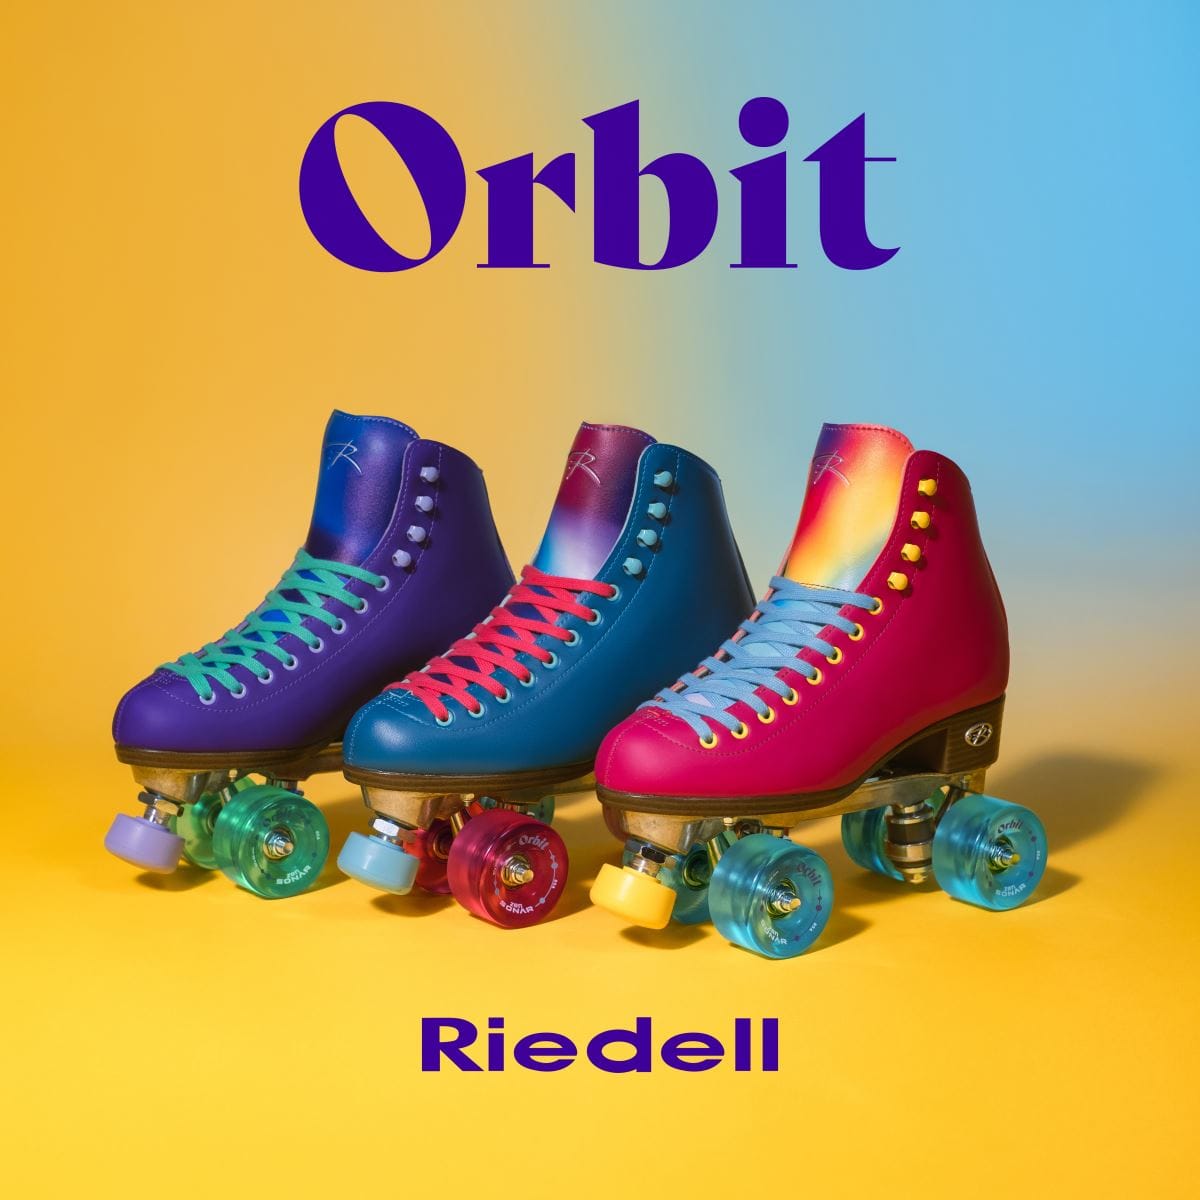 Roller Skates Riedell Orbit Roller Skate Set- Orchid Riedell The Groove Skate Shop